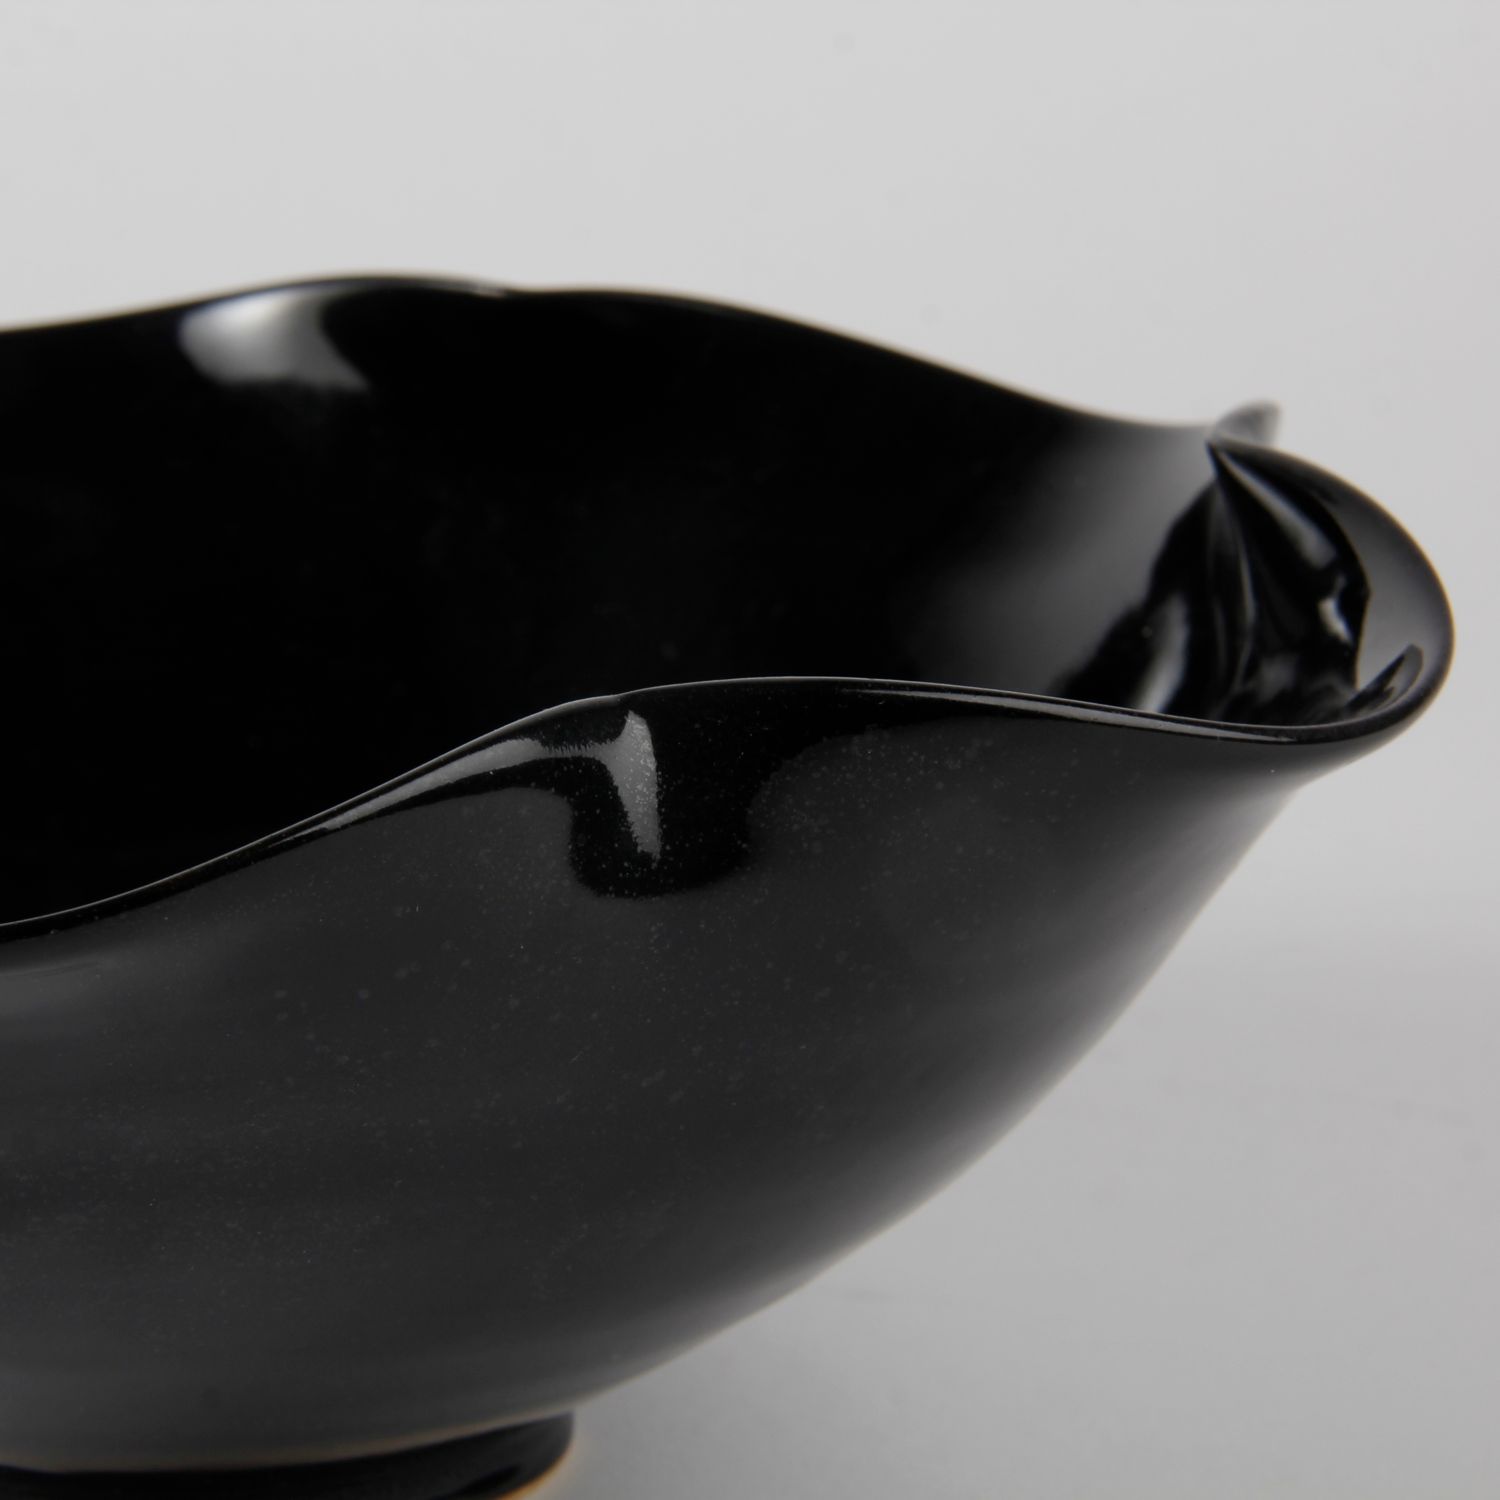 Natalie Waddell: Medium Black Footed Bowl Product Image 4 of 5